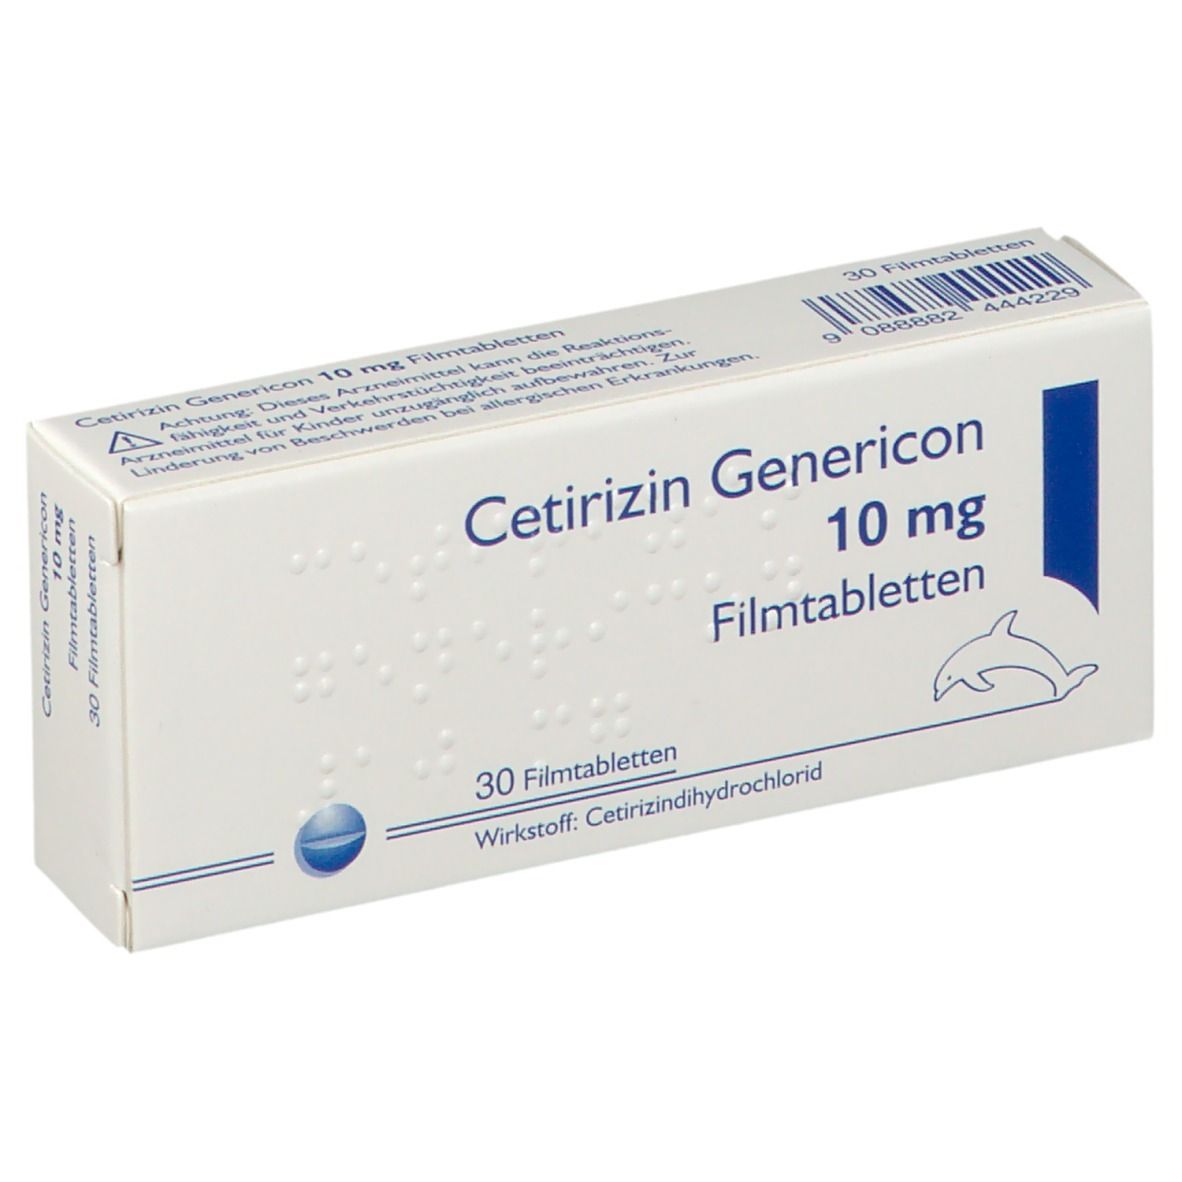 Cetirizin Genericon 10 mg